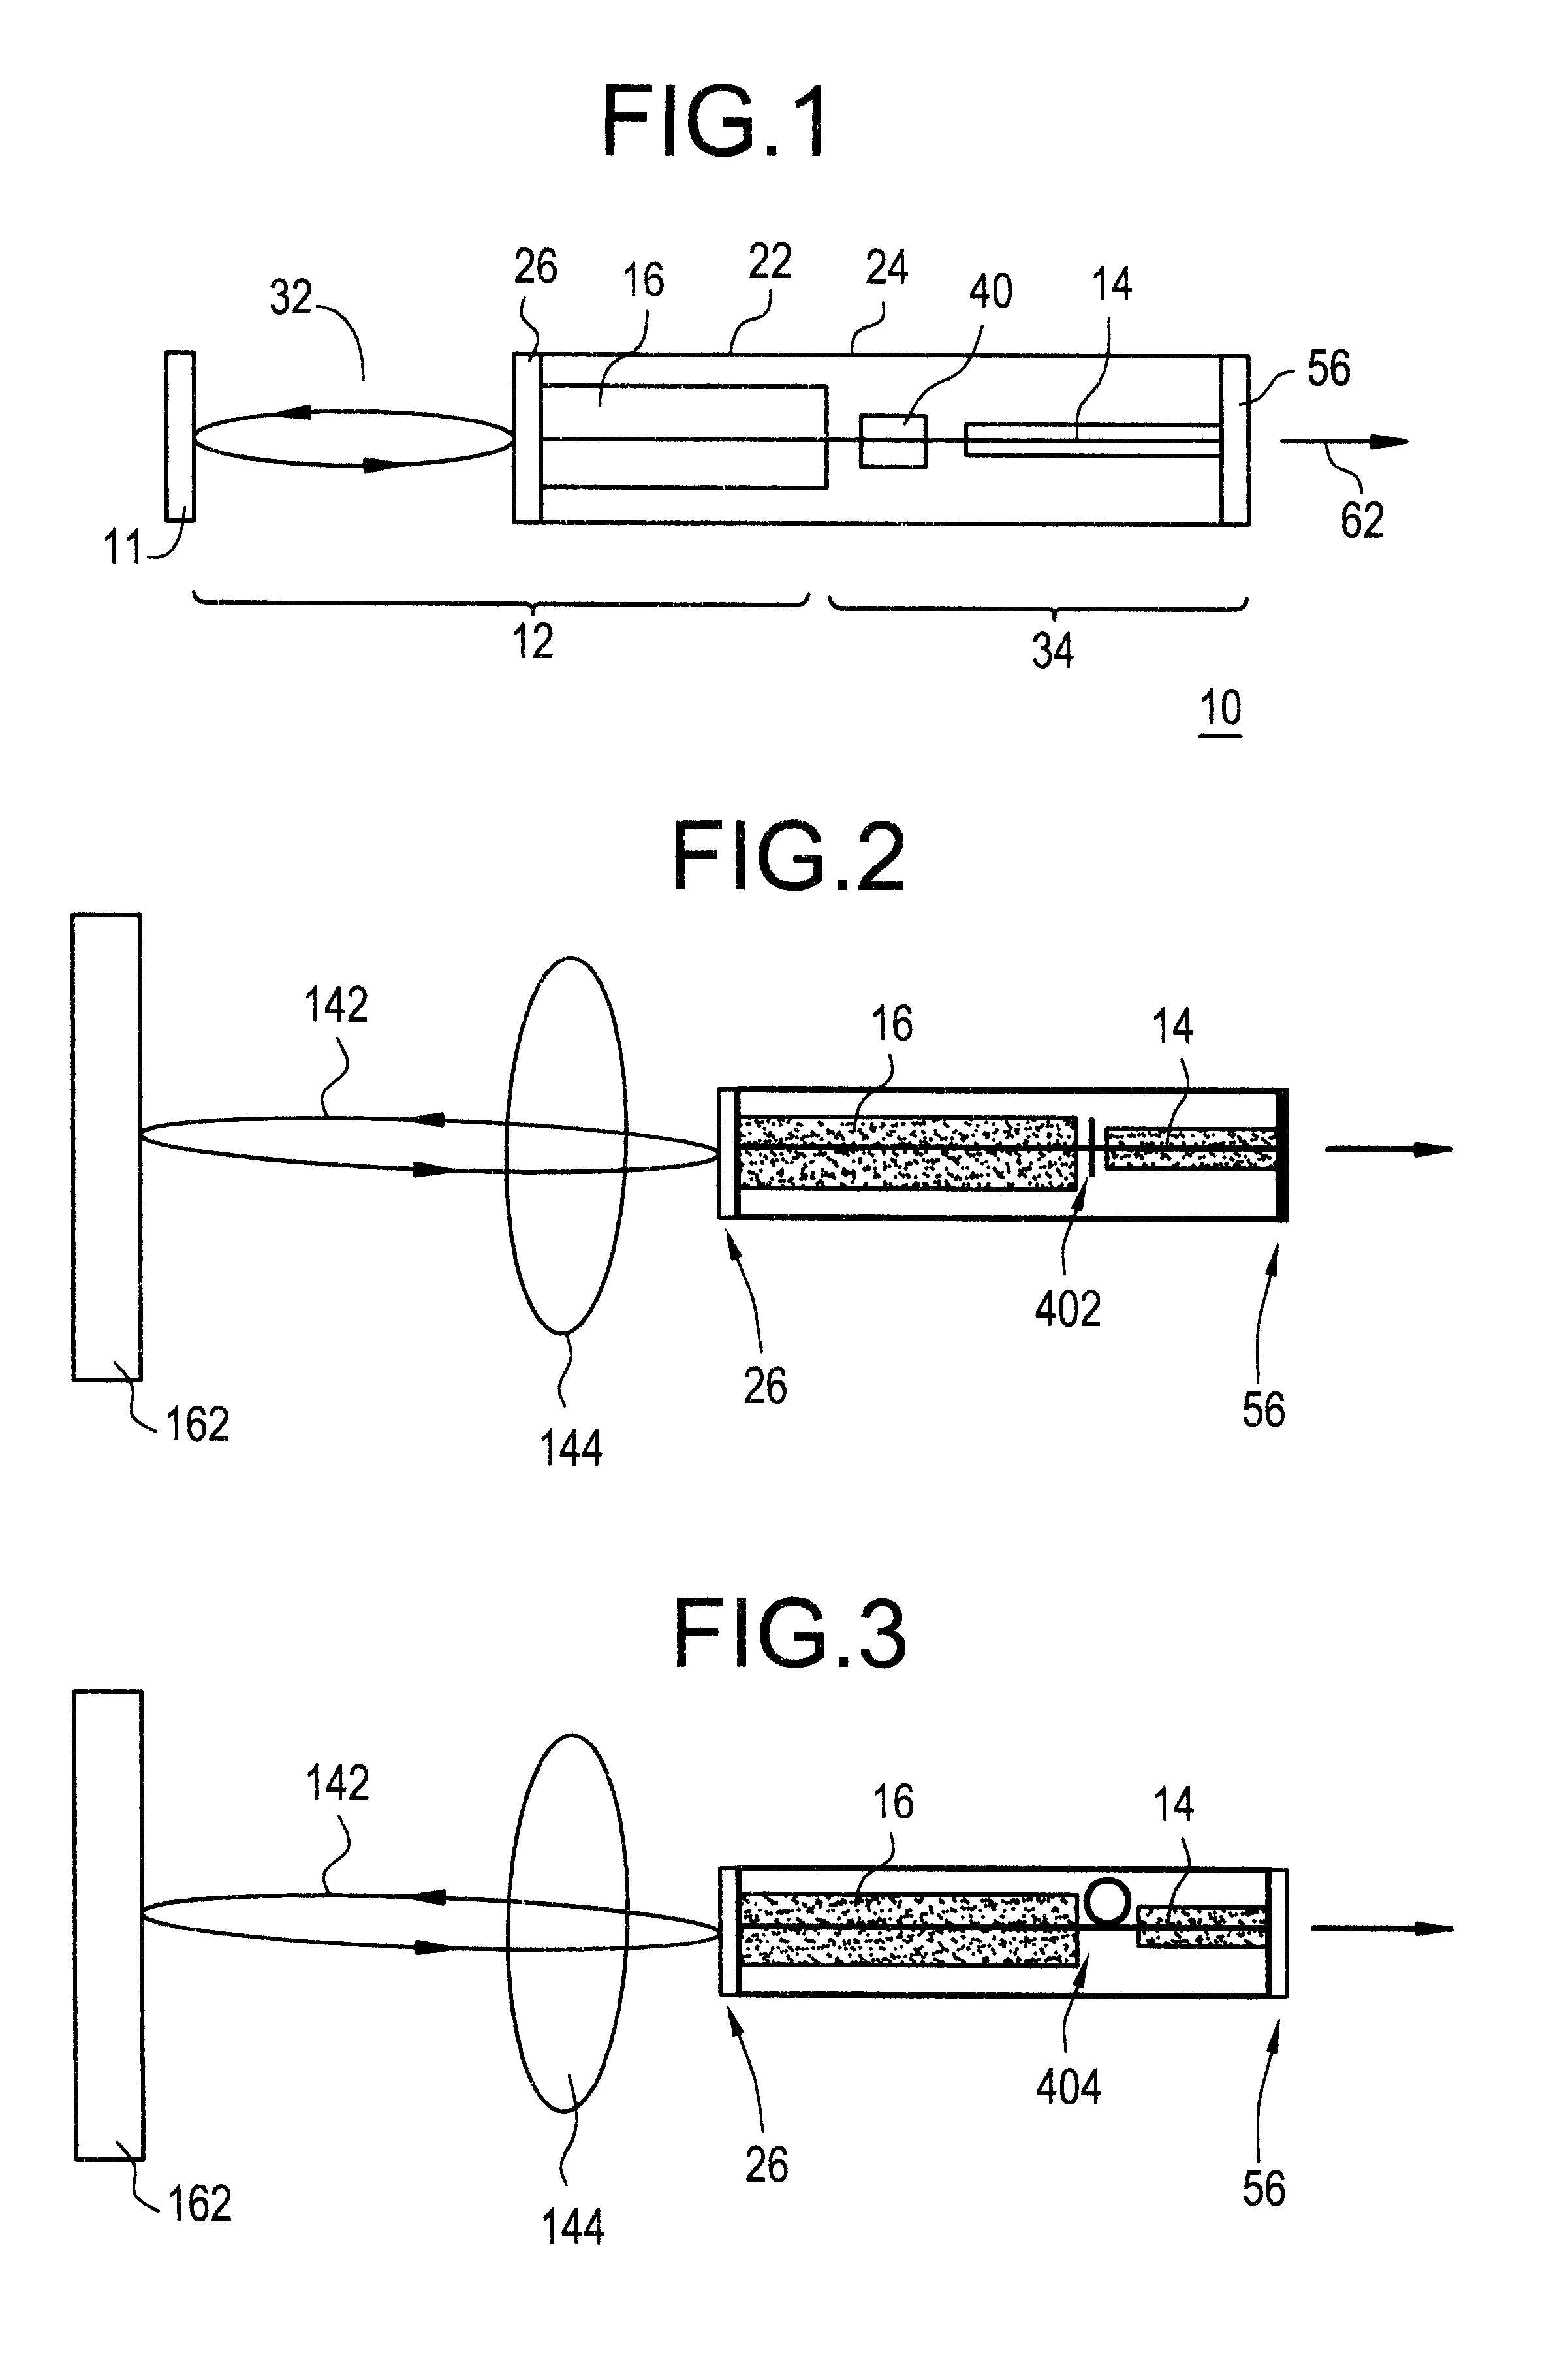 Wavelength-locked external cavity lasers with an integrated modulator